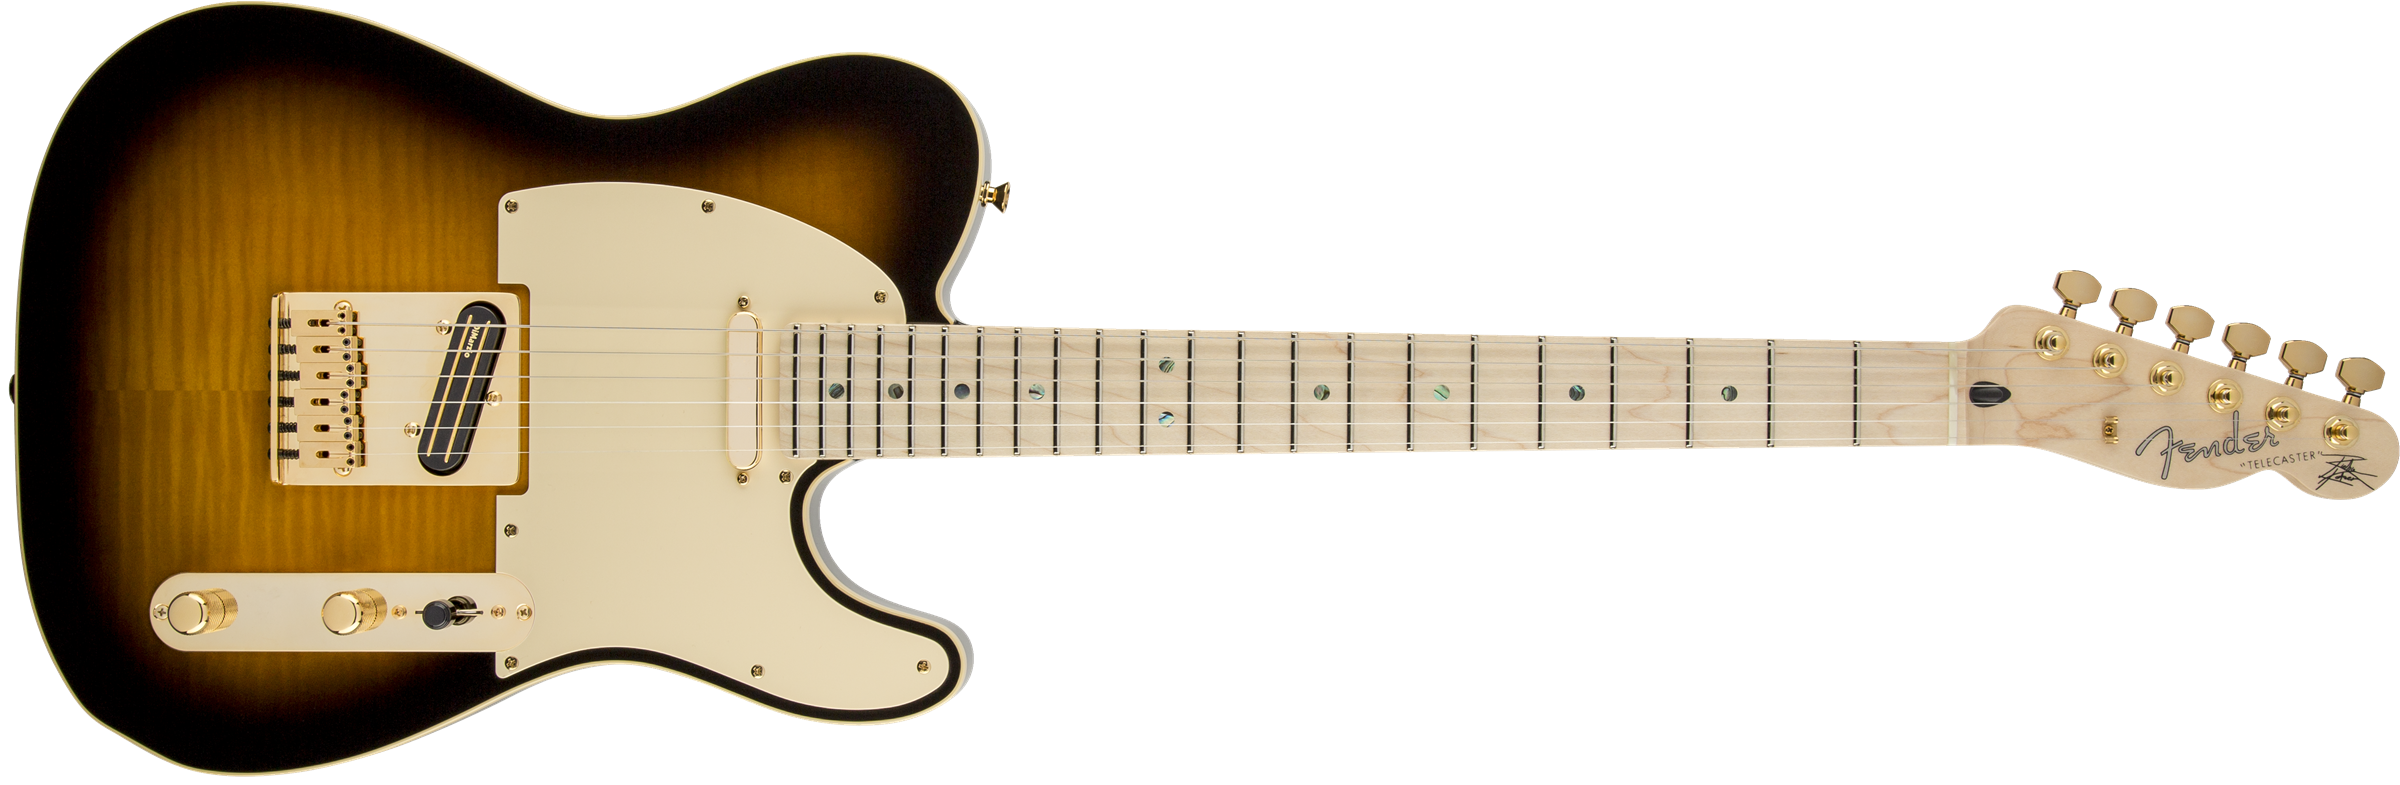 Fender Telecaster Richie Kotzen (jap, Mn) - Brown Sunburst - Tel shape electric guitar - Variation 1